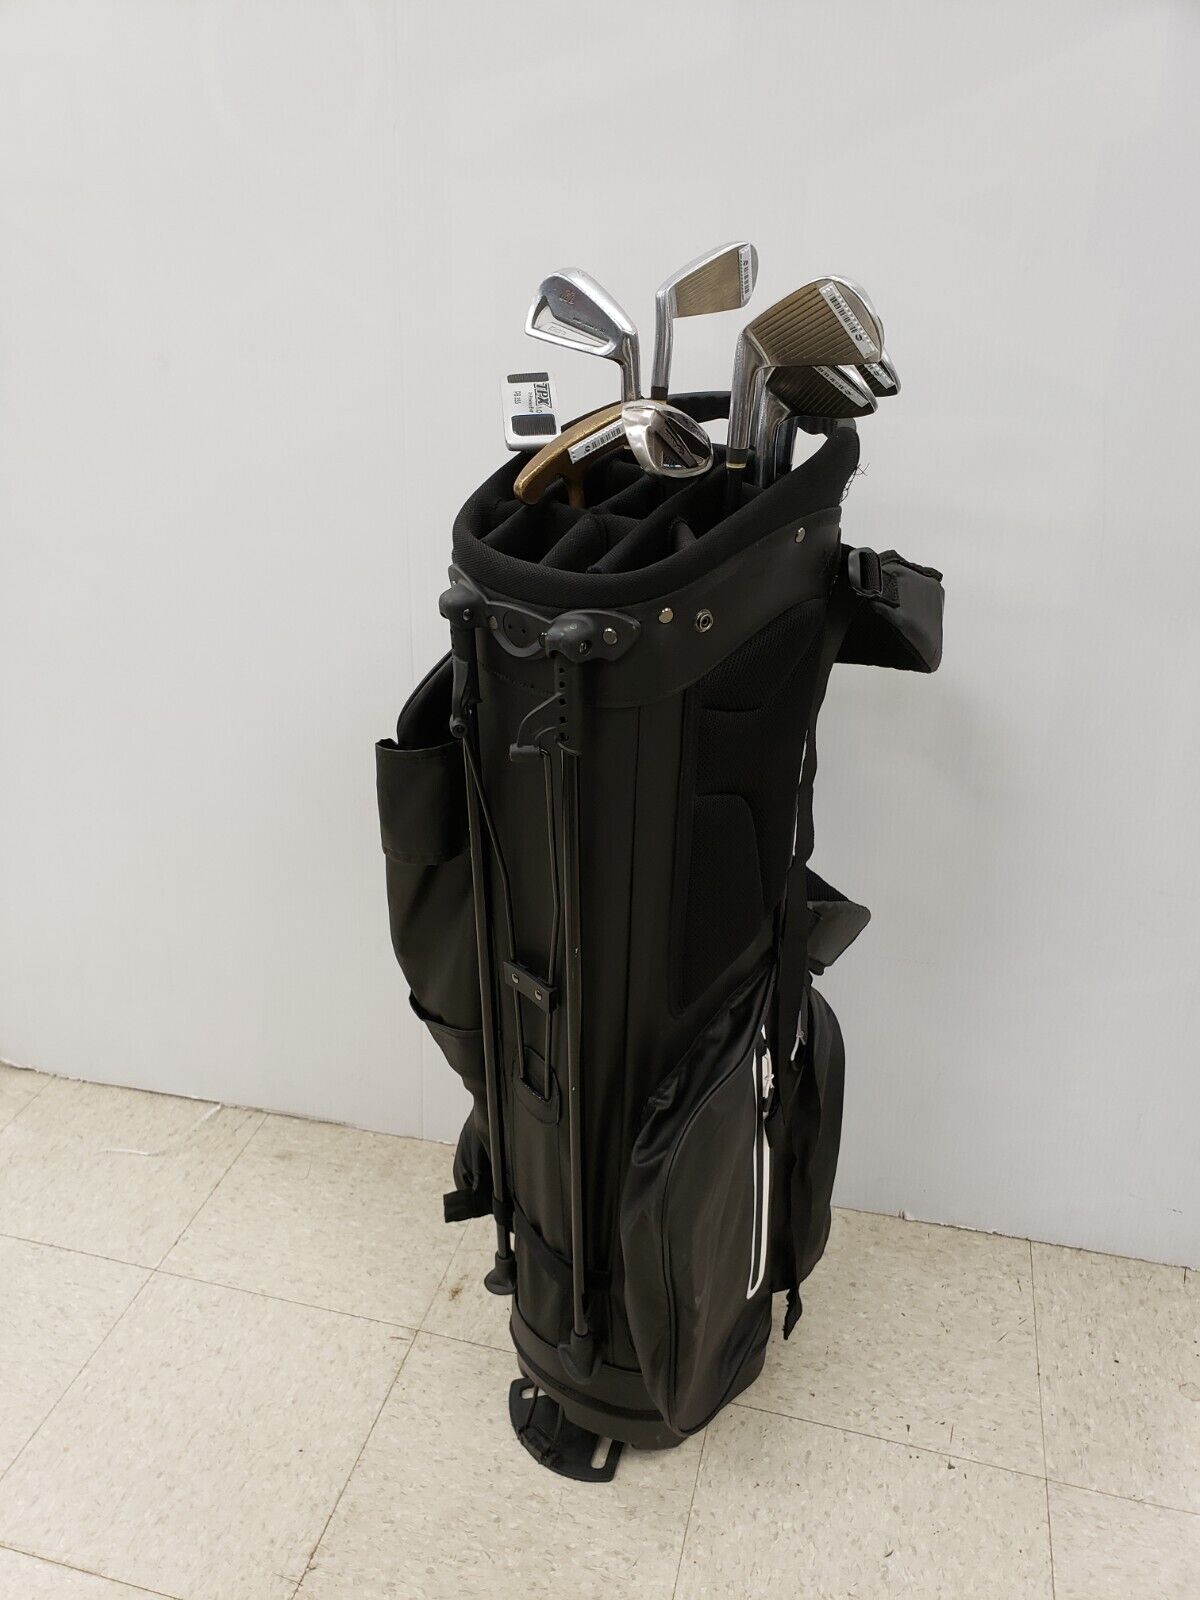 (48002-1) TBX PB355 Golf Clubs - Set of 9